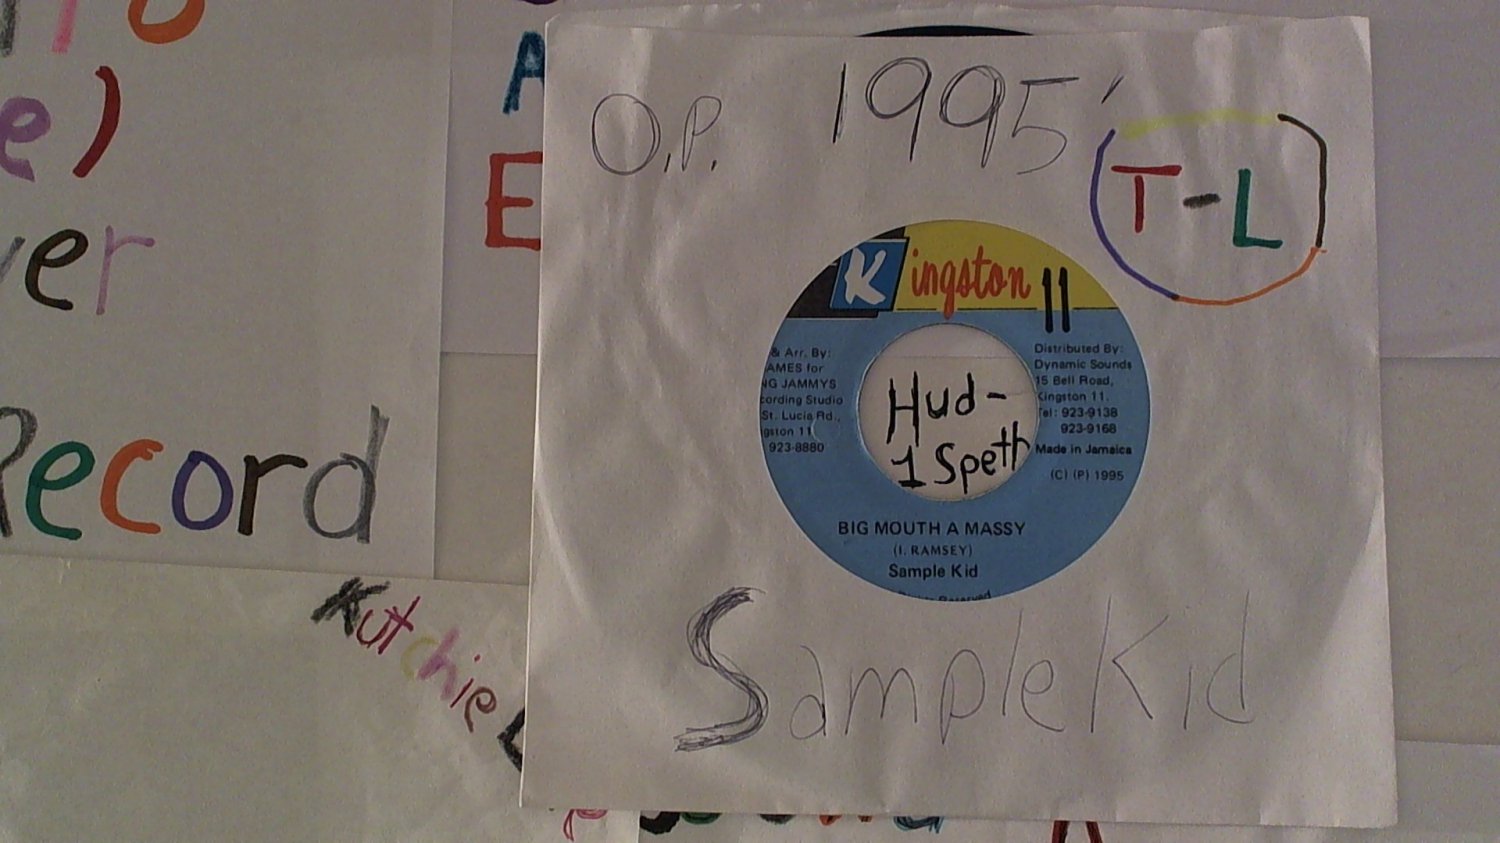 artist: Sample Kid side A: Big Mouth A Massy / B: label: Kingston 11 (Used) 7" Reggae